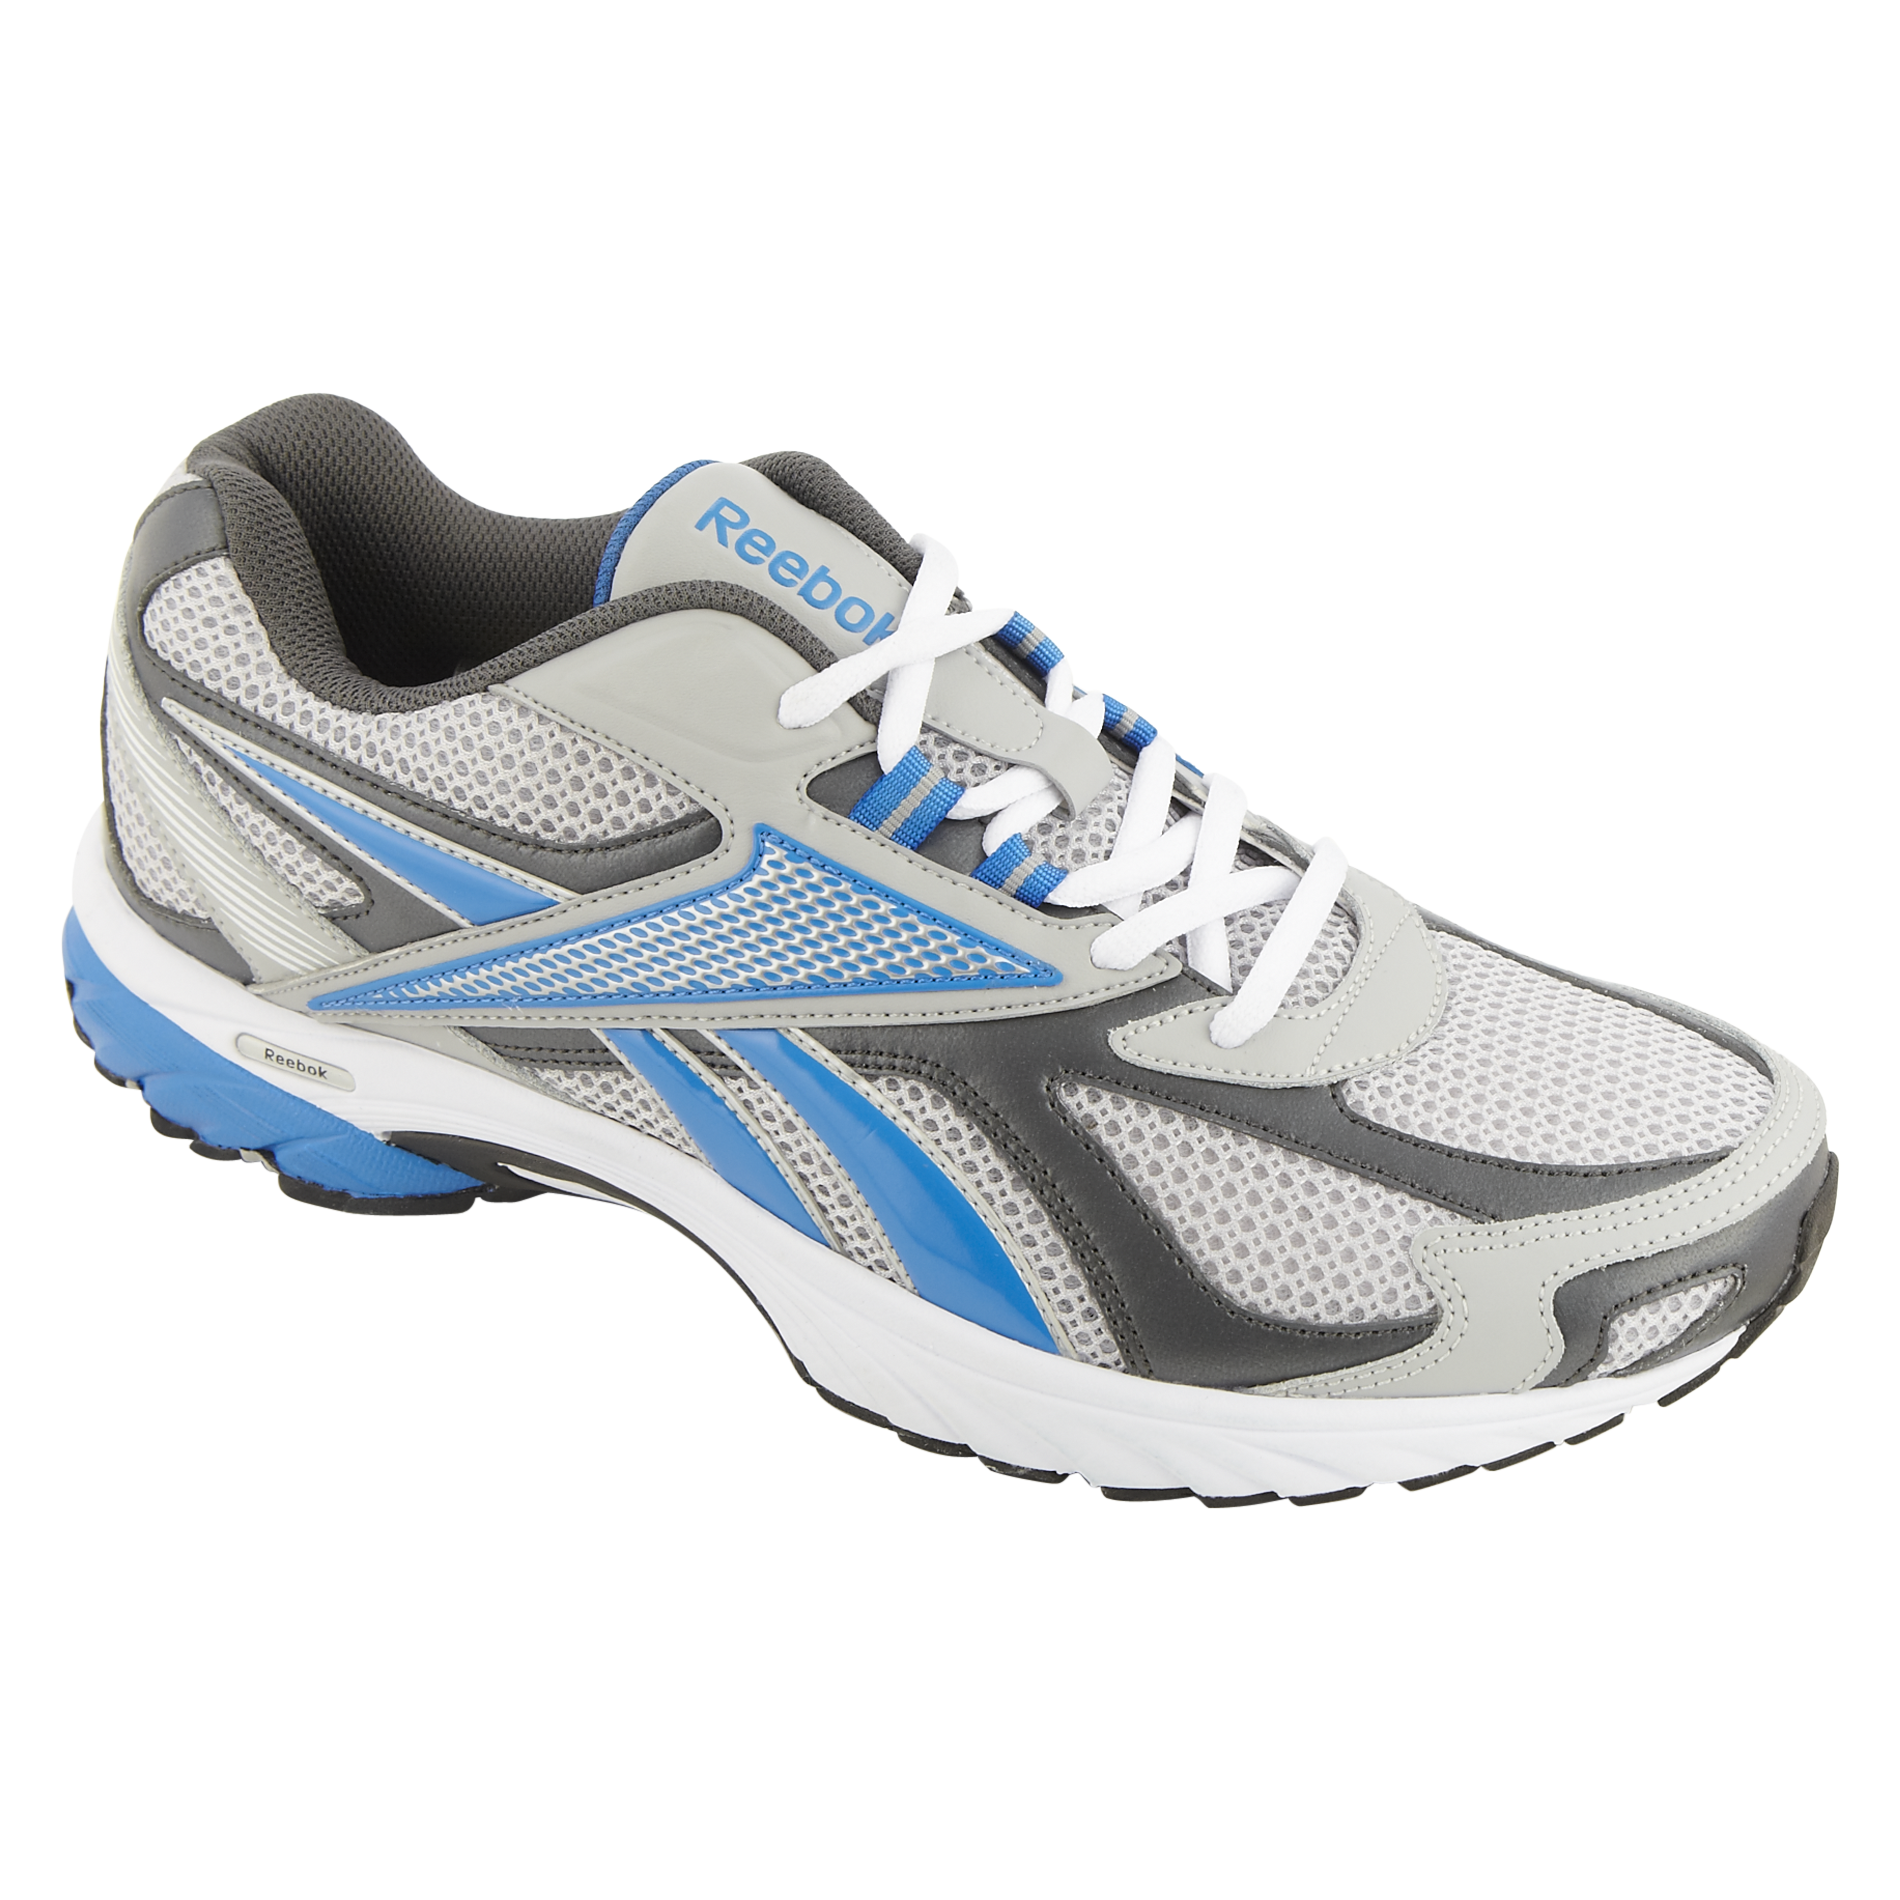 Reebok Men's Pheehan Running Athletic Shoe Wide Width - Grey/Blue